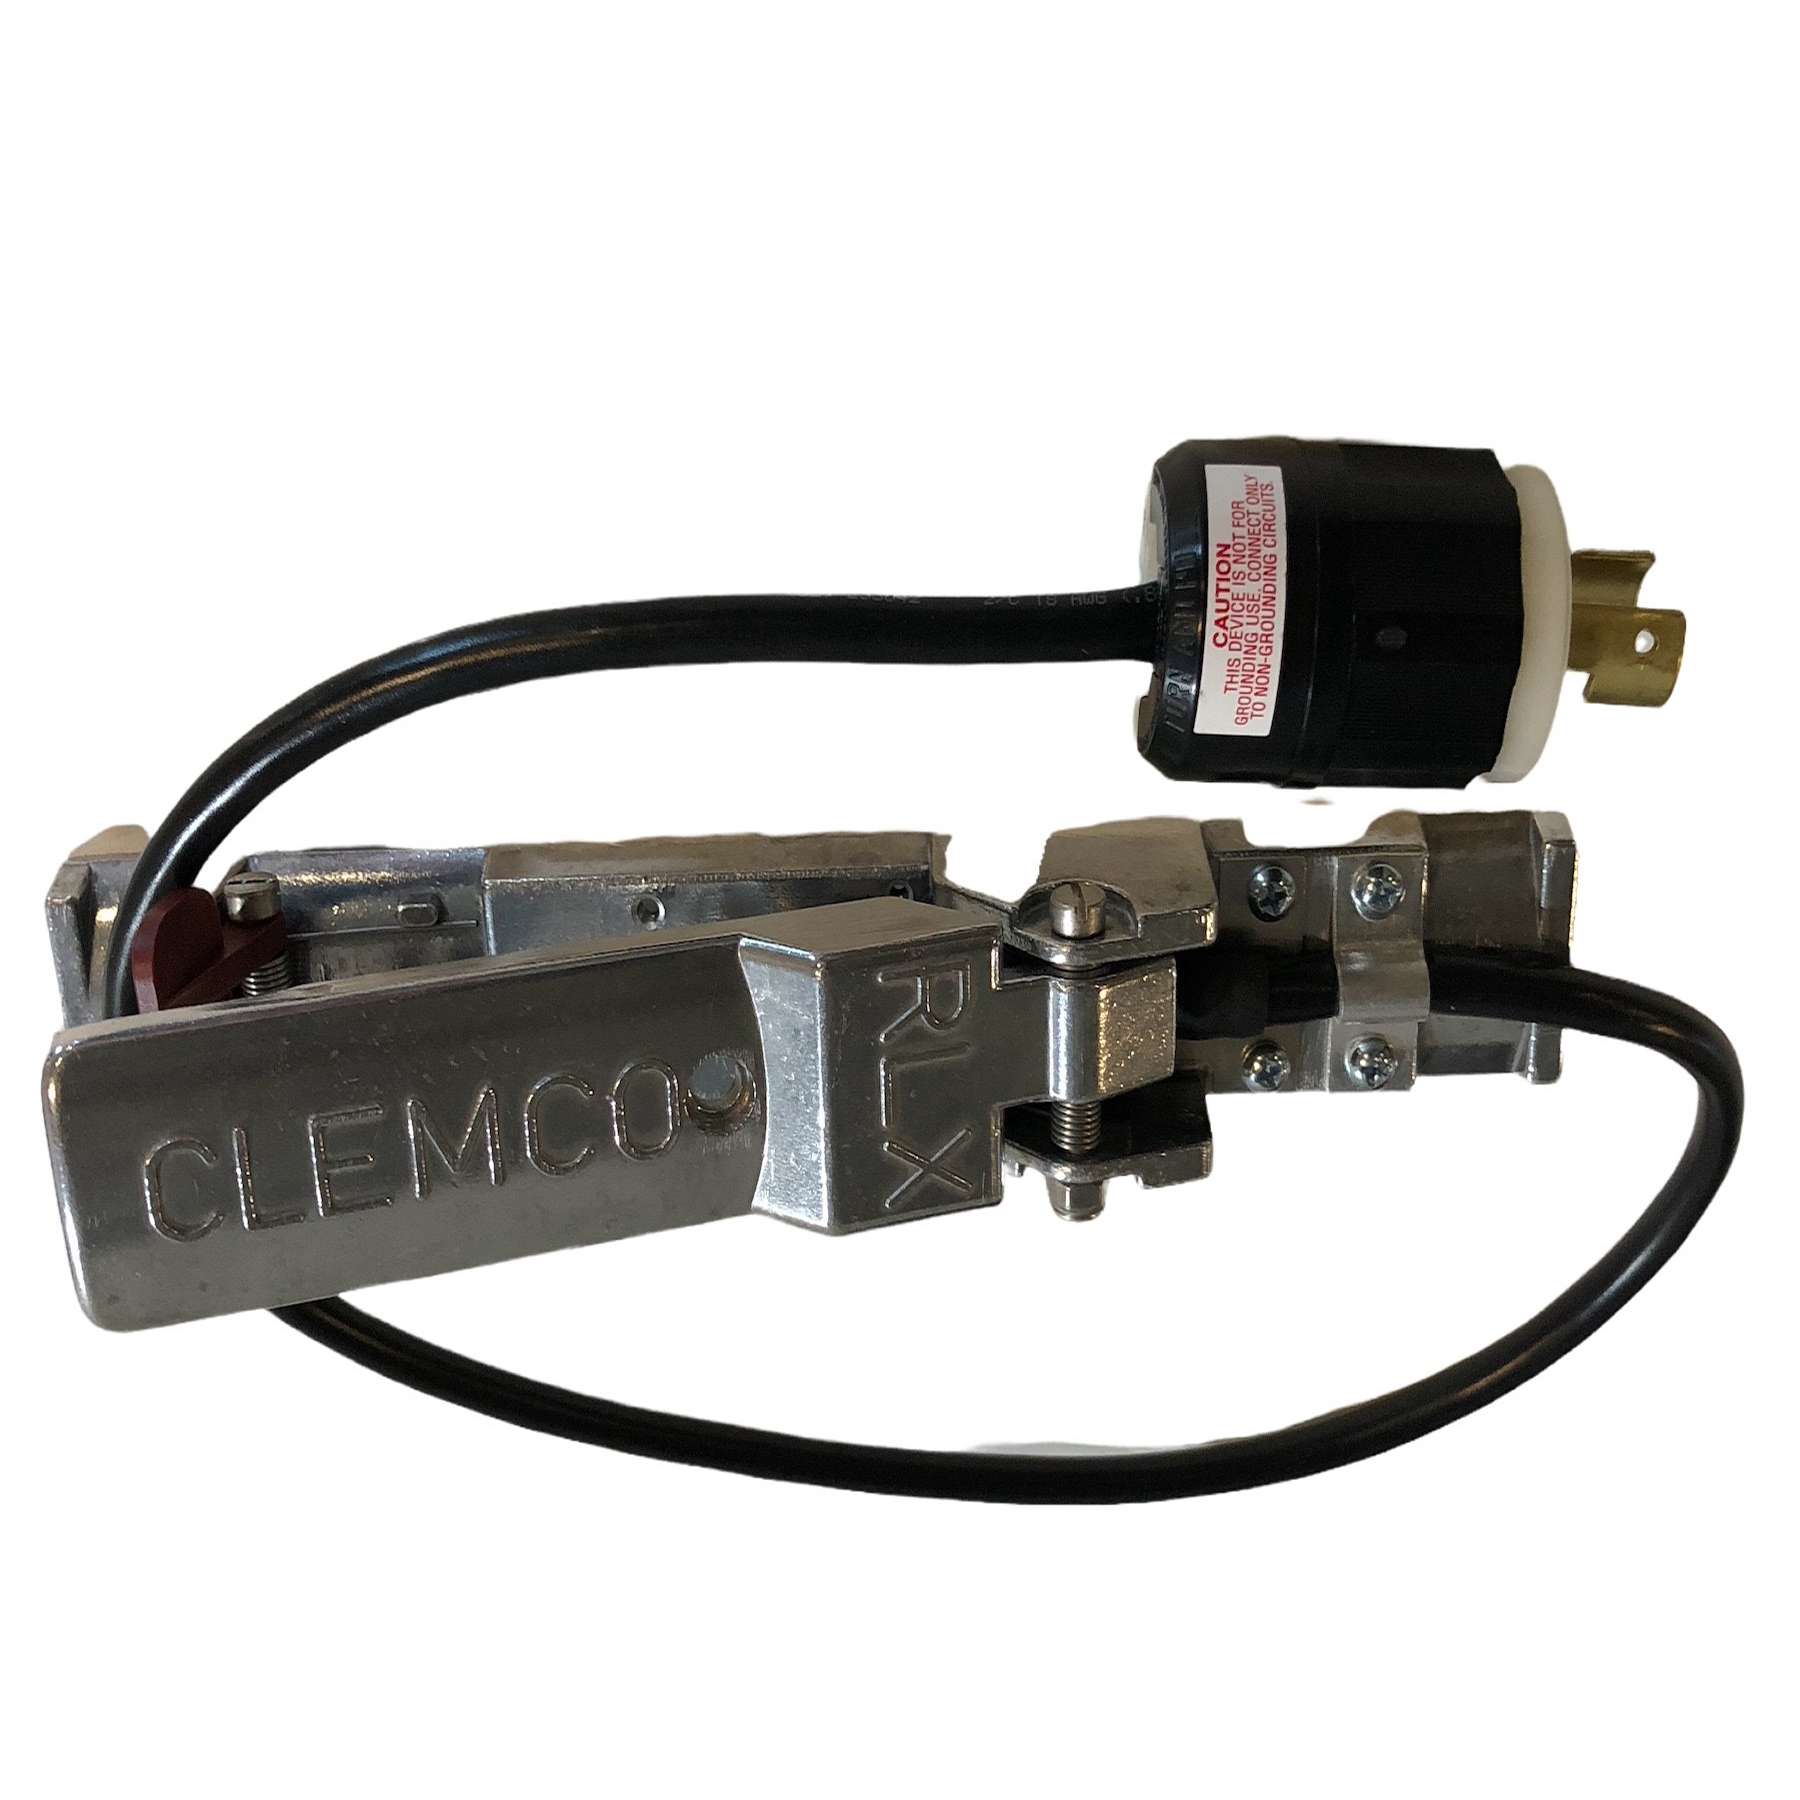 Clemco RLX Electric Remote Control Deadman Handle